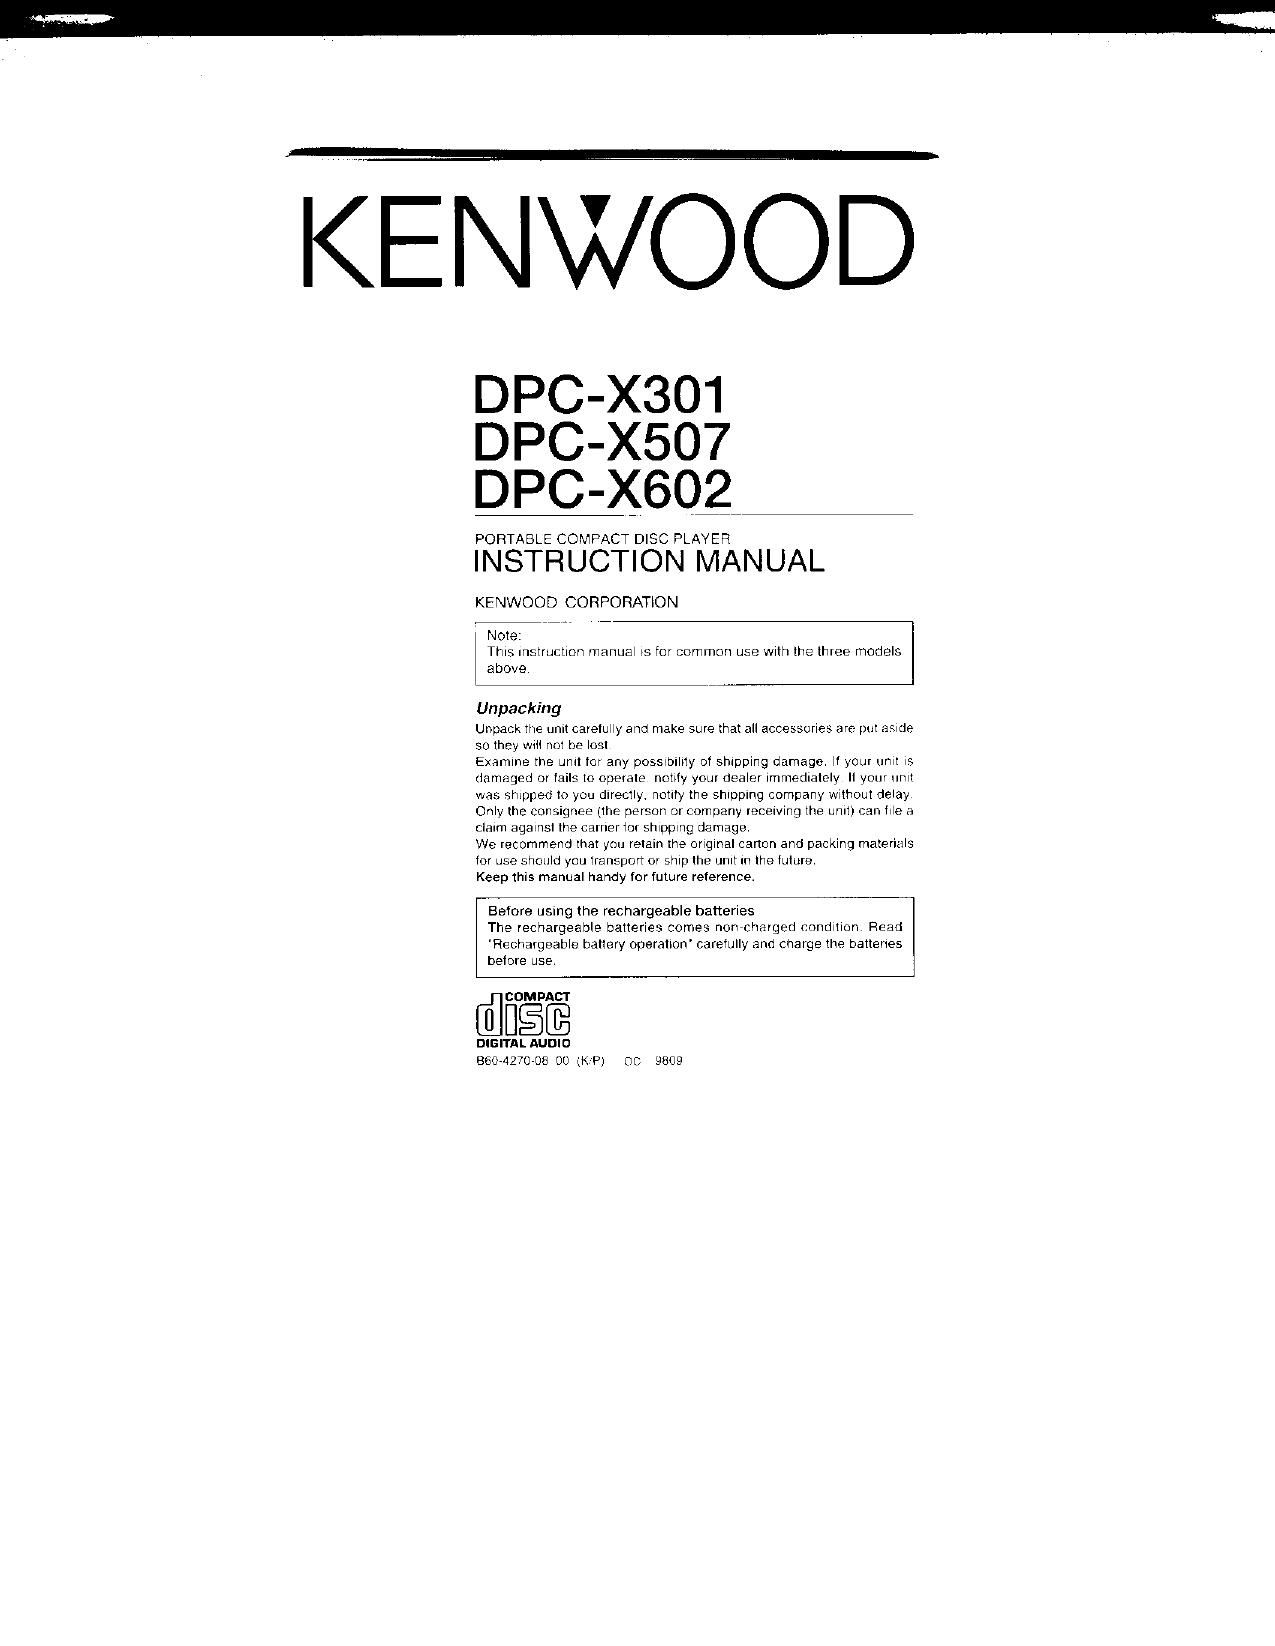 Kenwood DPCX 602 Owners Manual